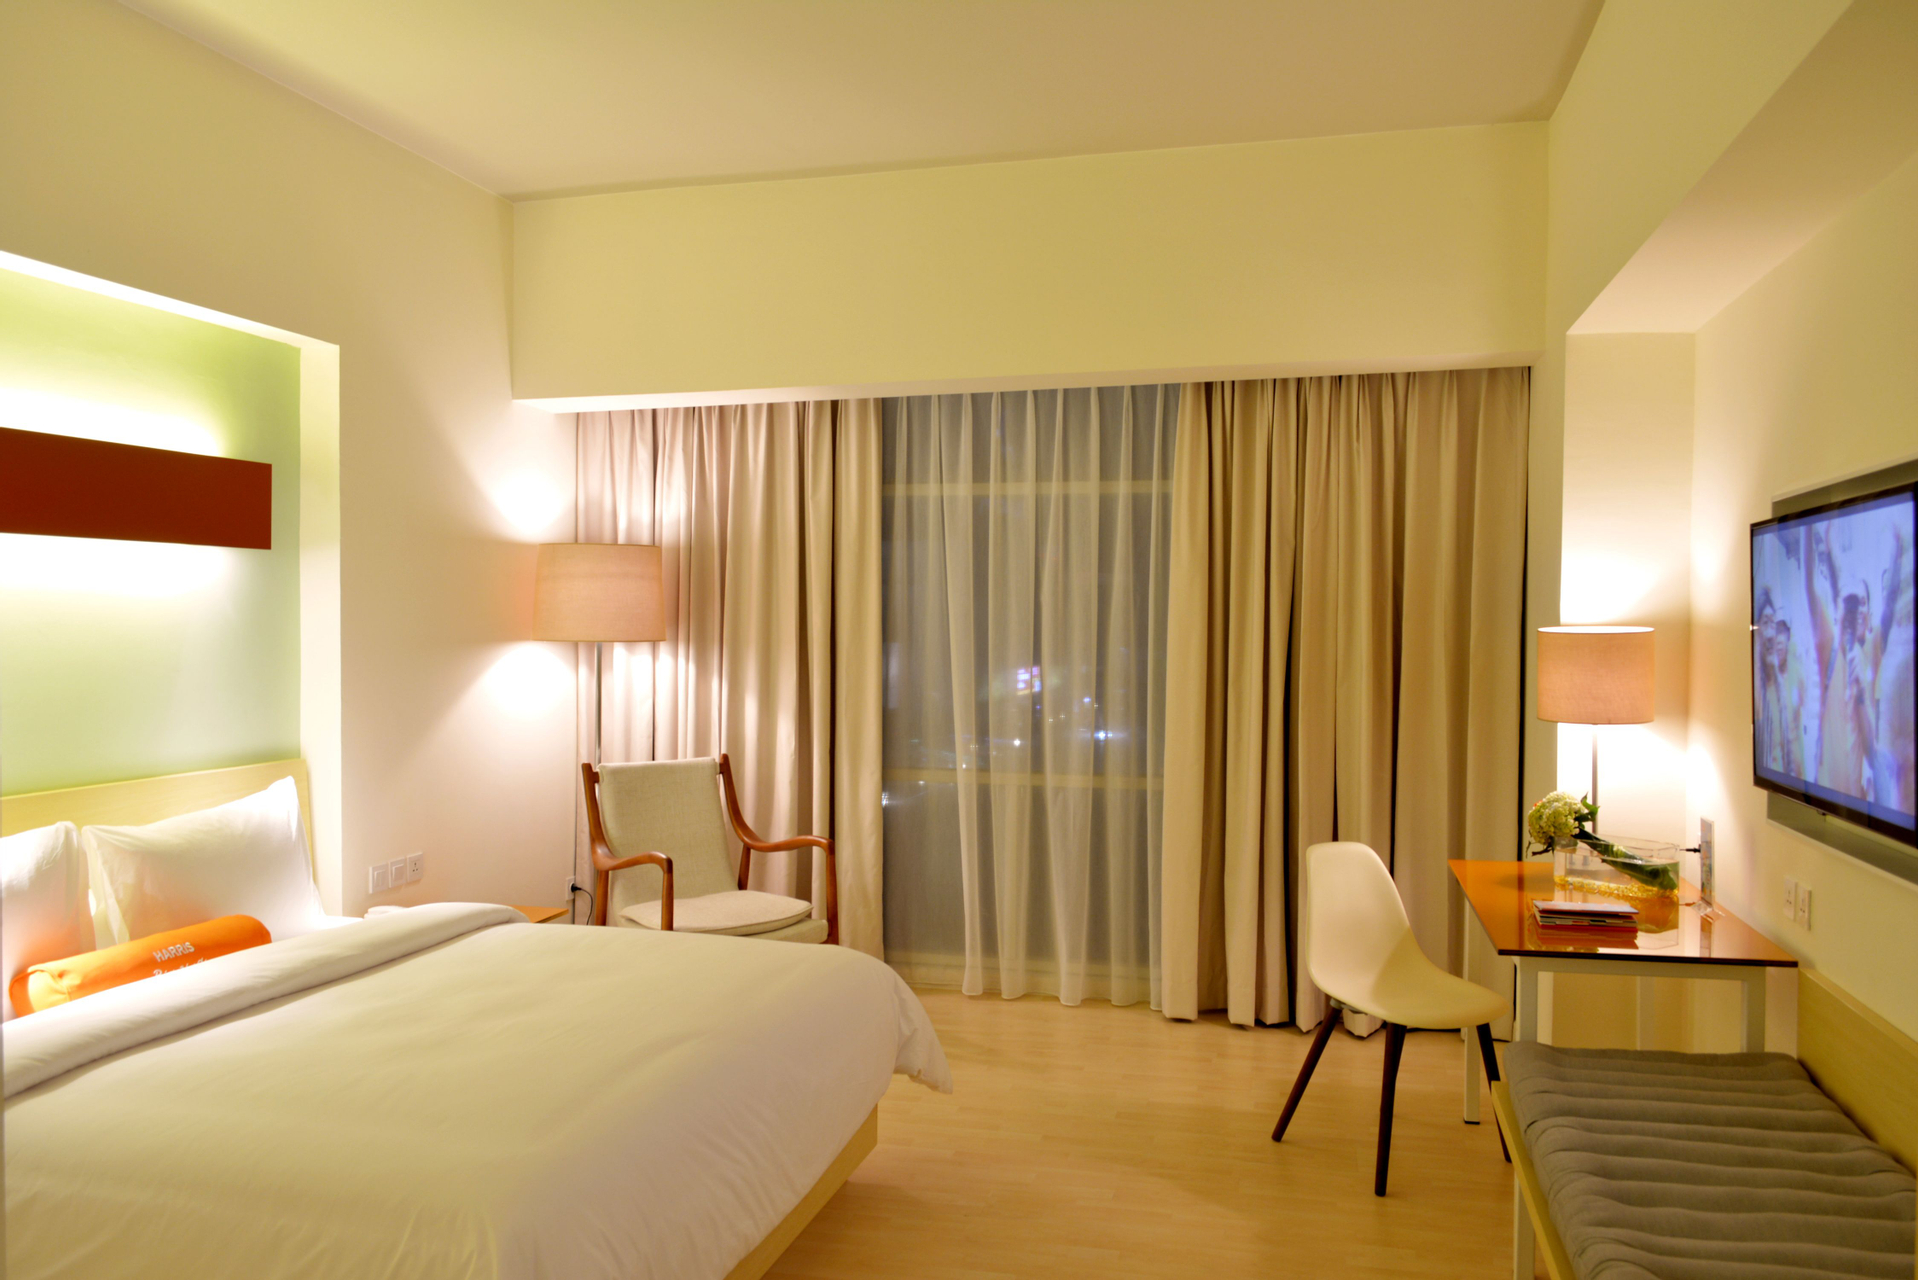 Bedroom 4, HARRIS Hotel & Conventions Bekasi, Bekasi